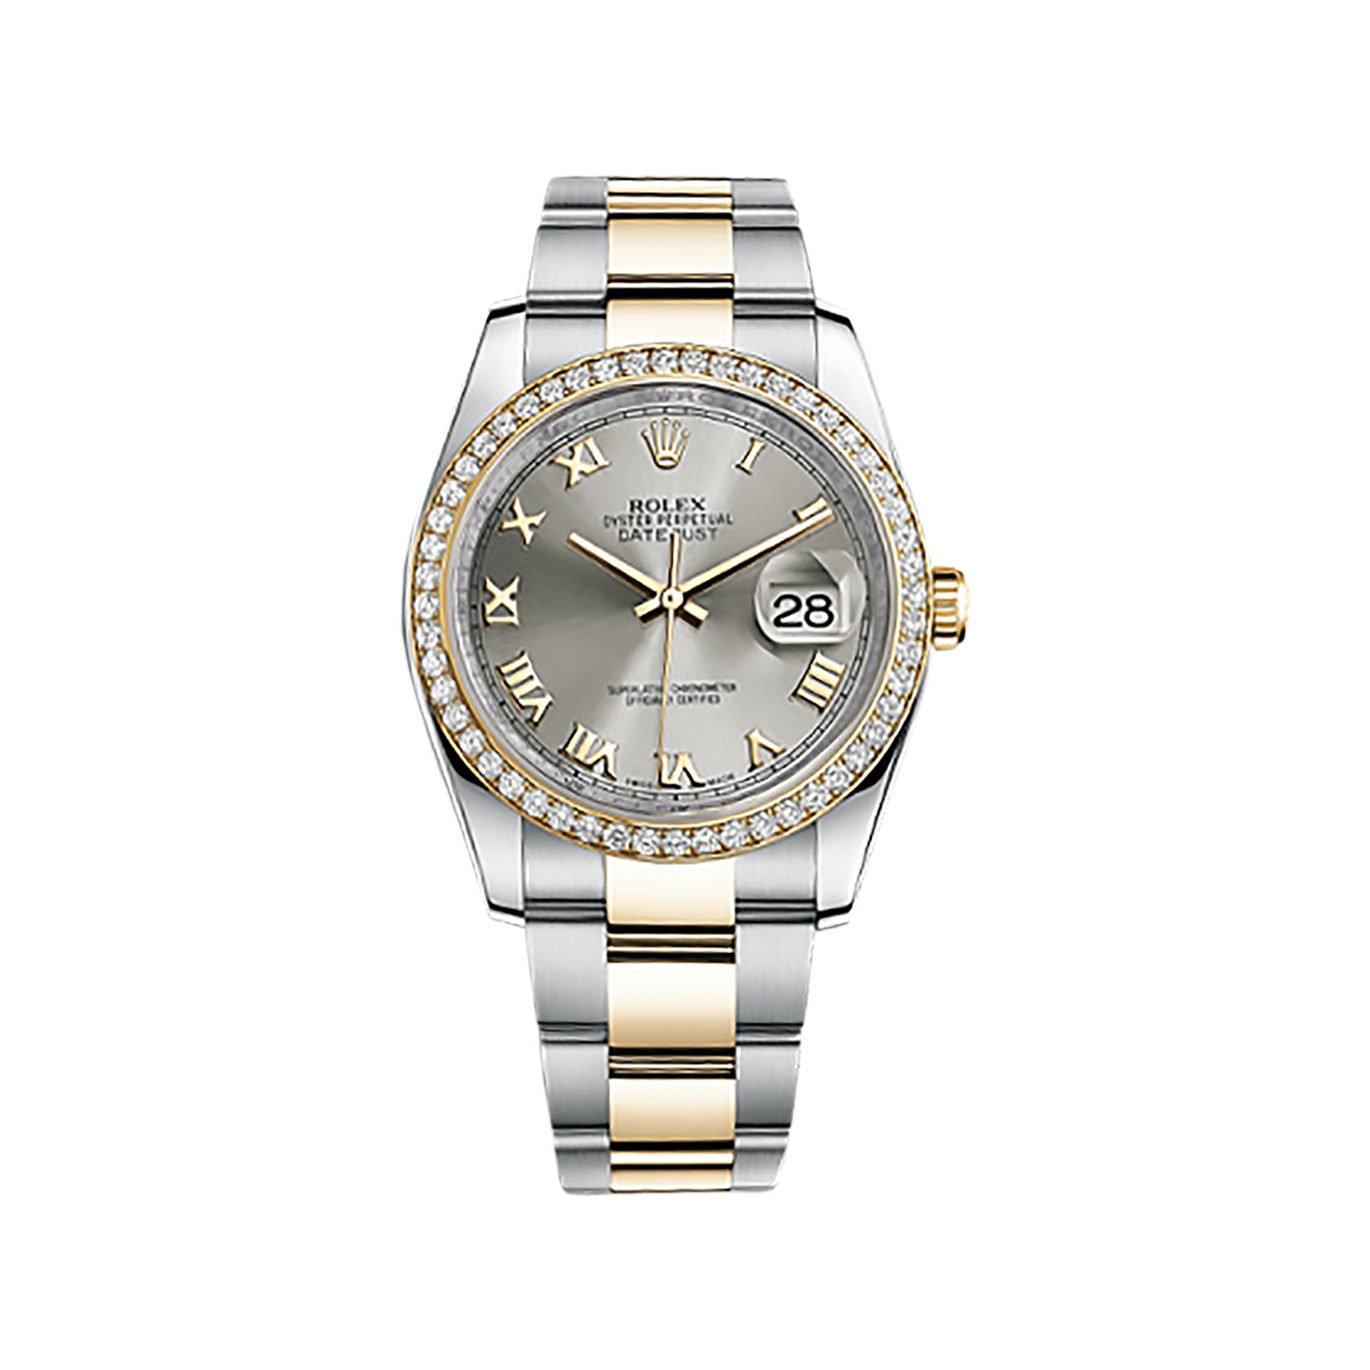 Datejust 36 116243 Gold & Stainless Steel Watch (Steel)